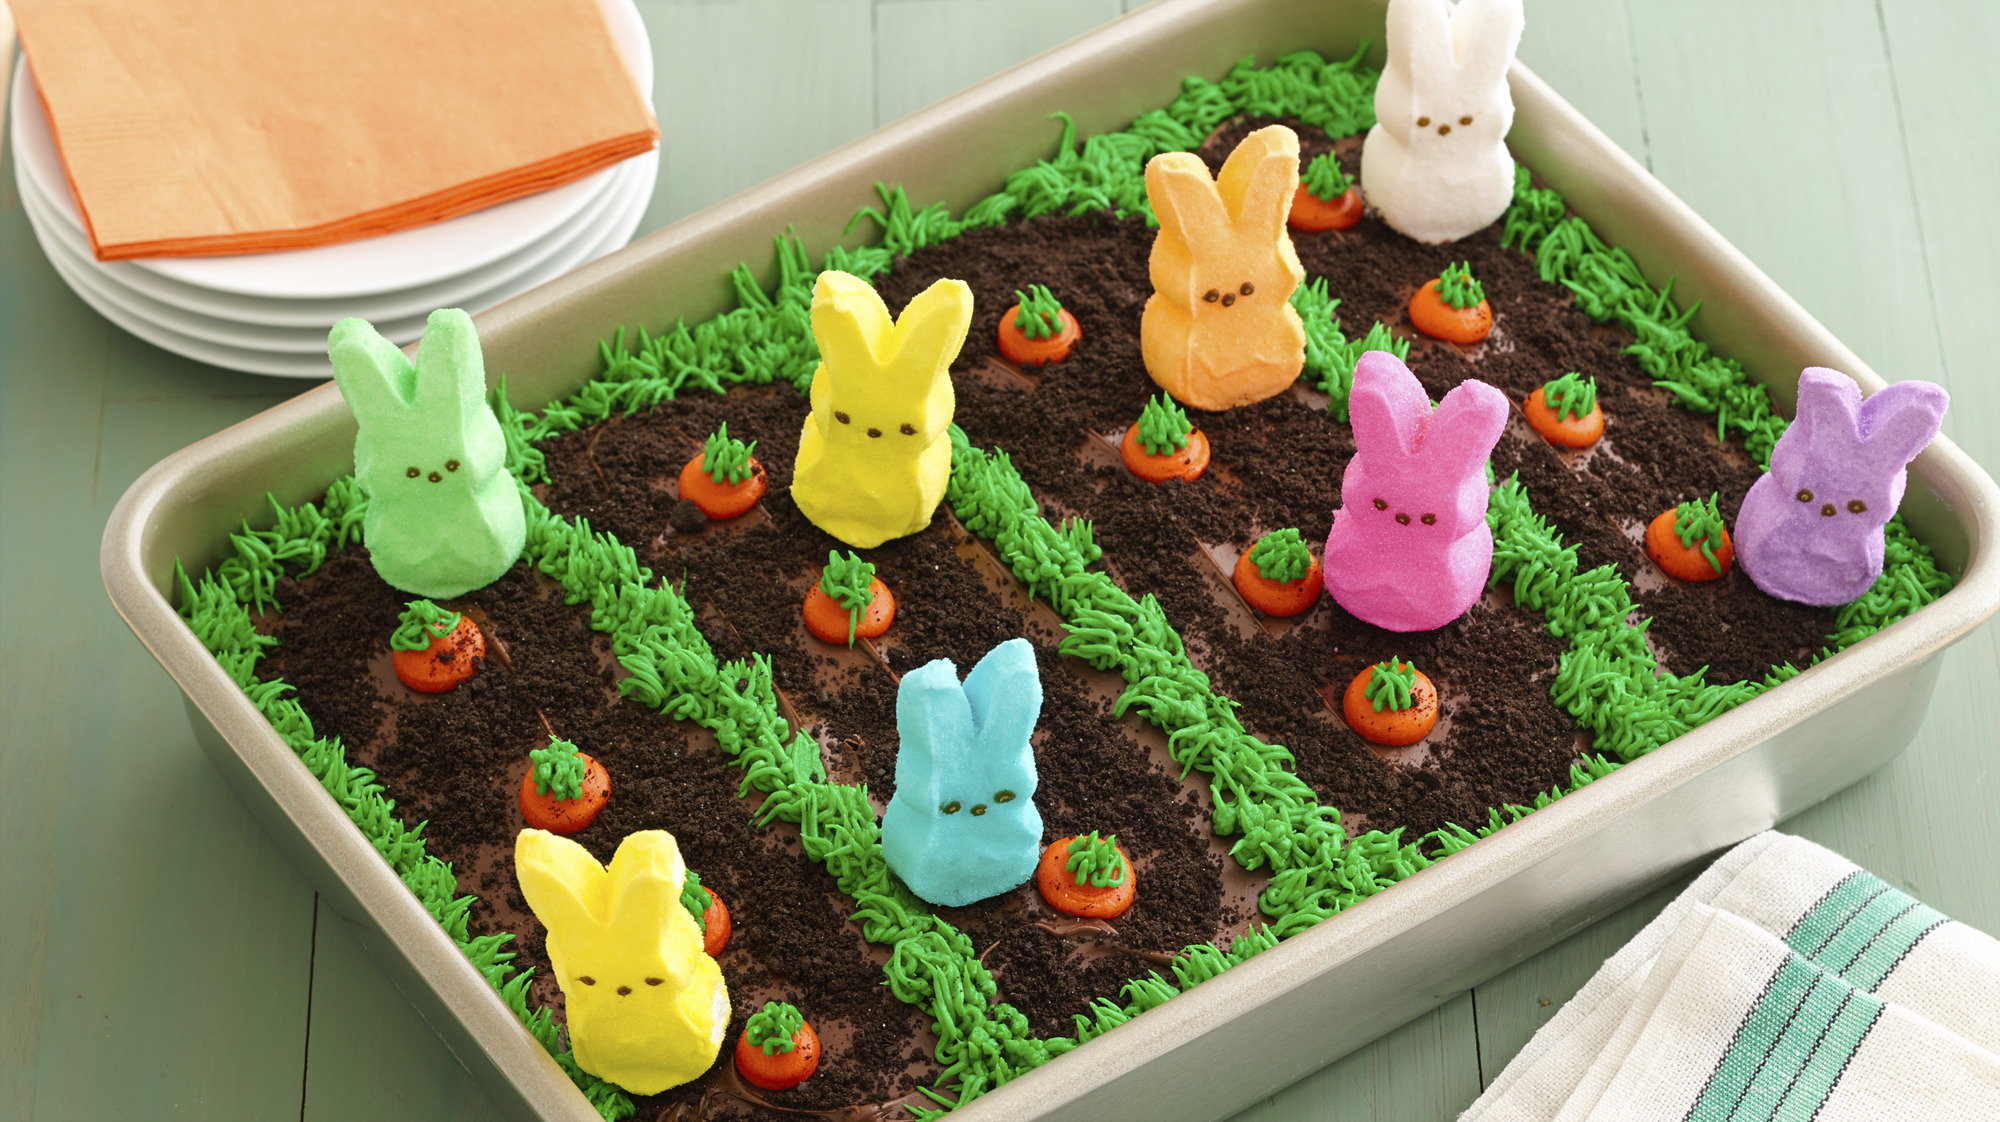 Easter celebration cake recipe - Kidspot